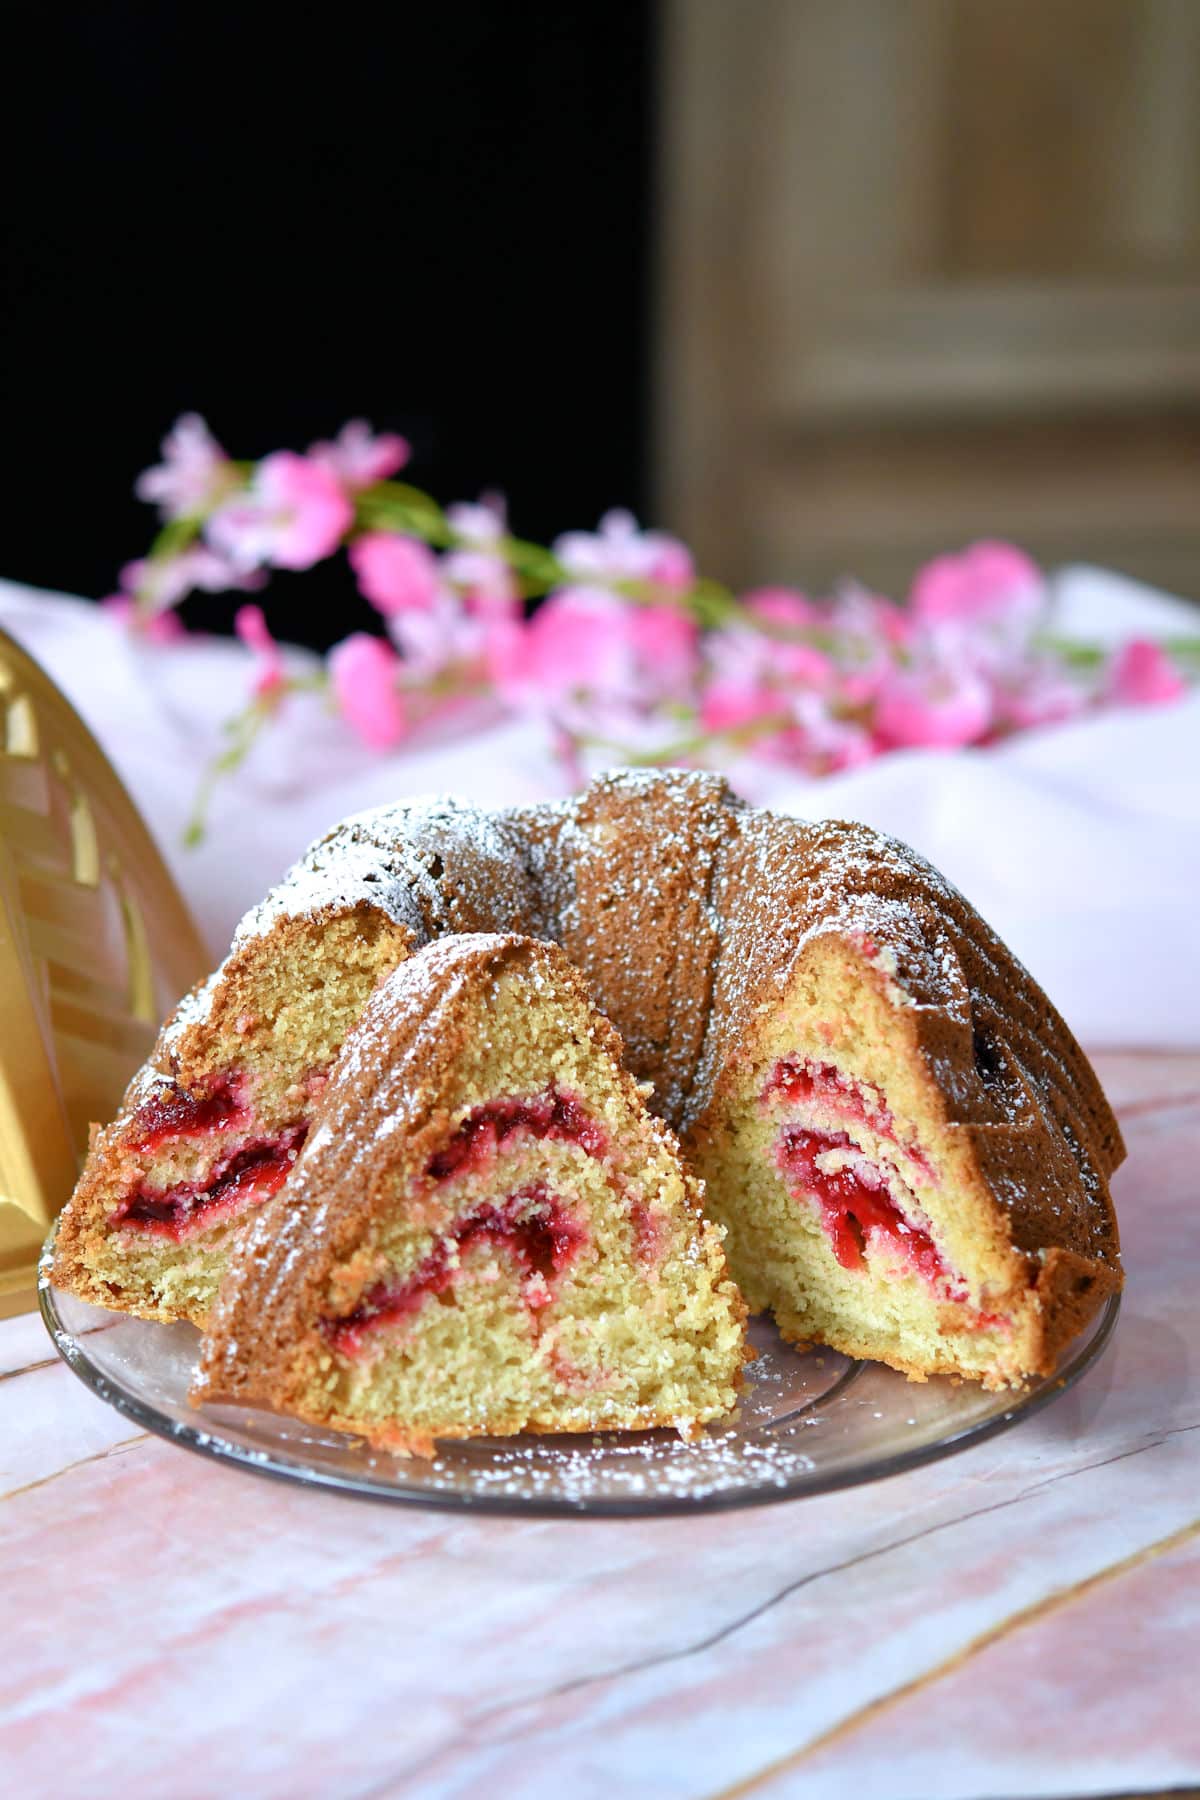 24Bite: Raspberry Swirl Cake Recipe
by Christian Guzman